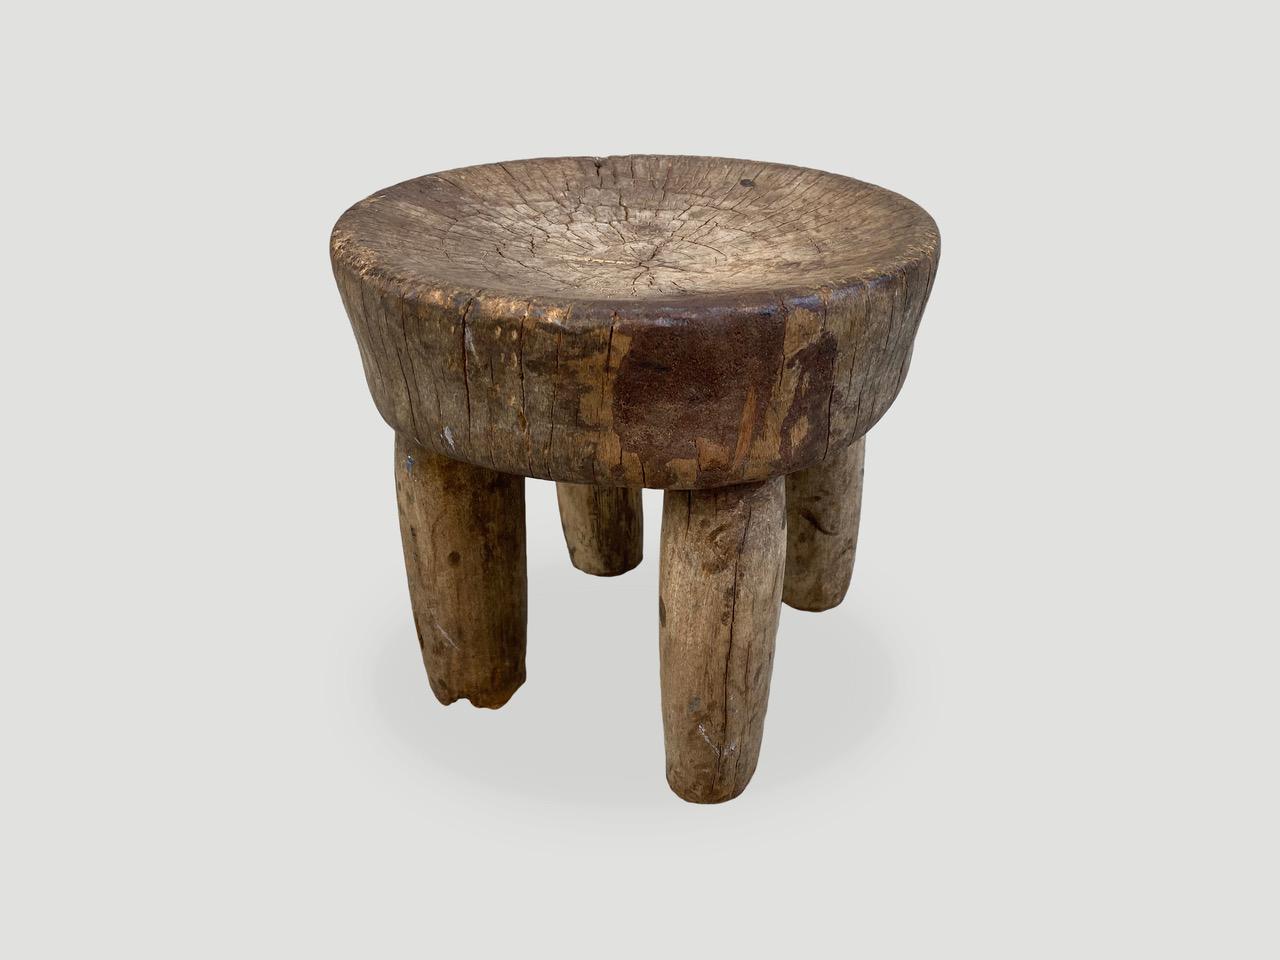 Tribal Andrianna Shamaris Antique African Wooden Wabi Sabi Side Table or Stool